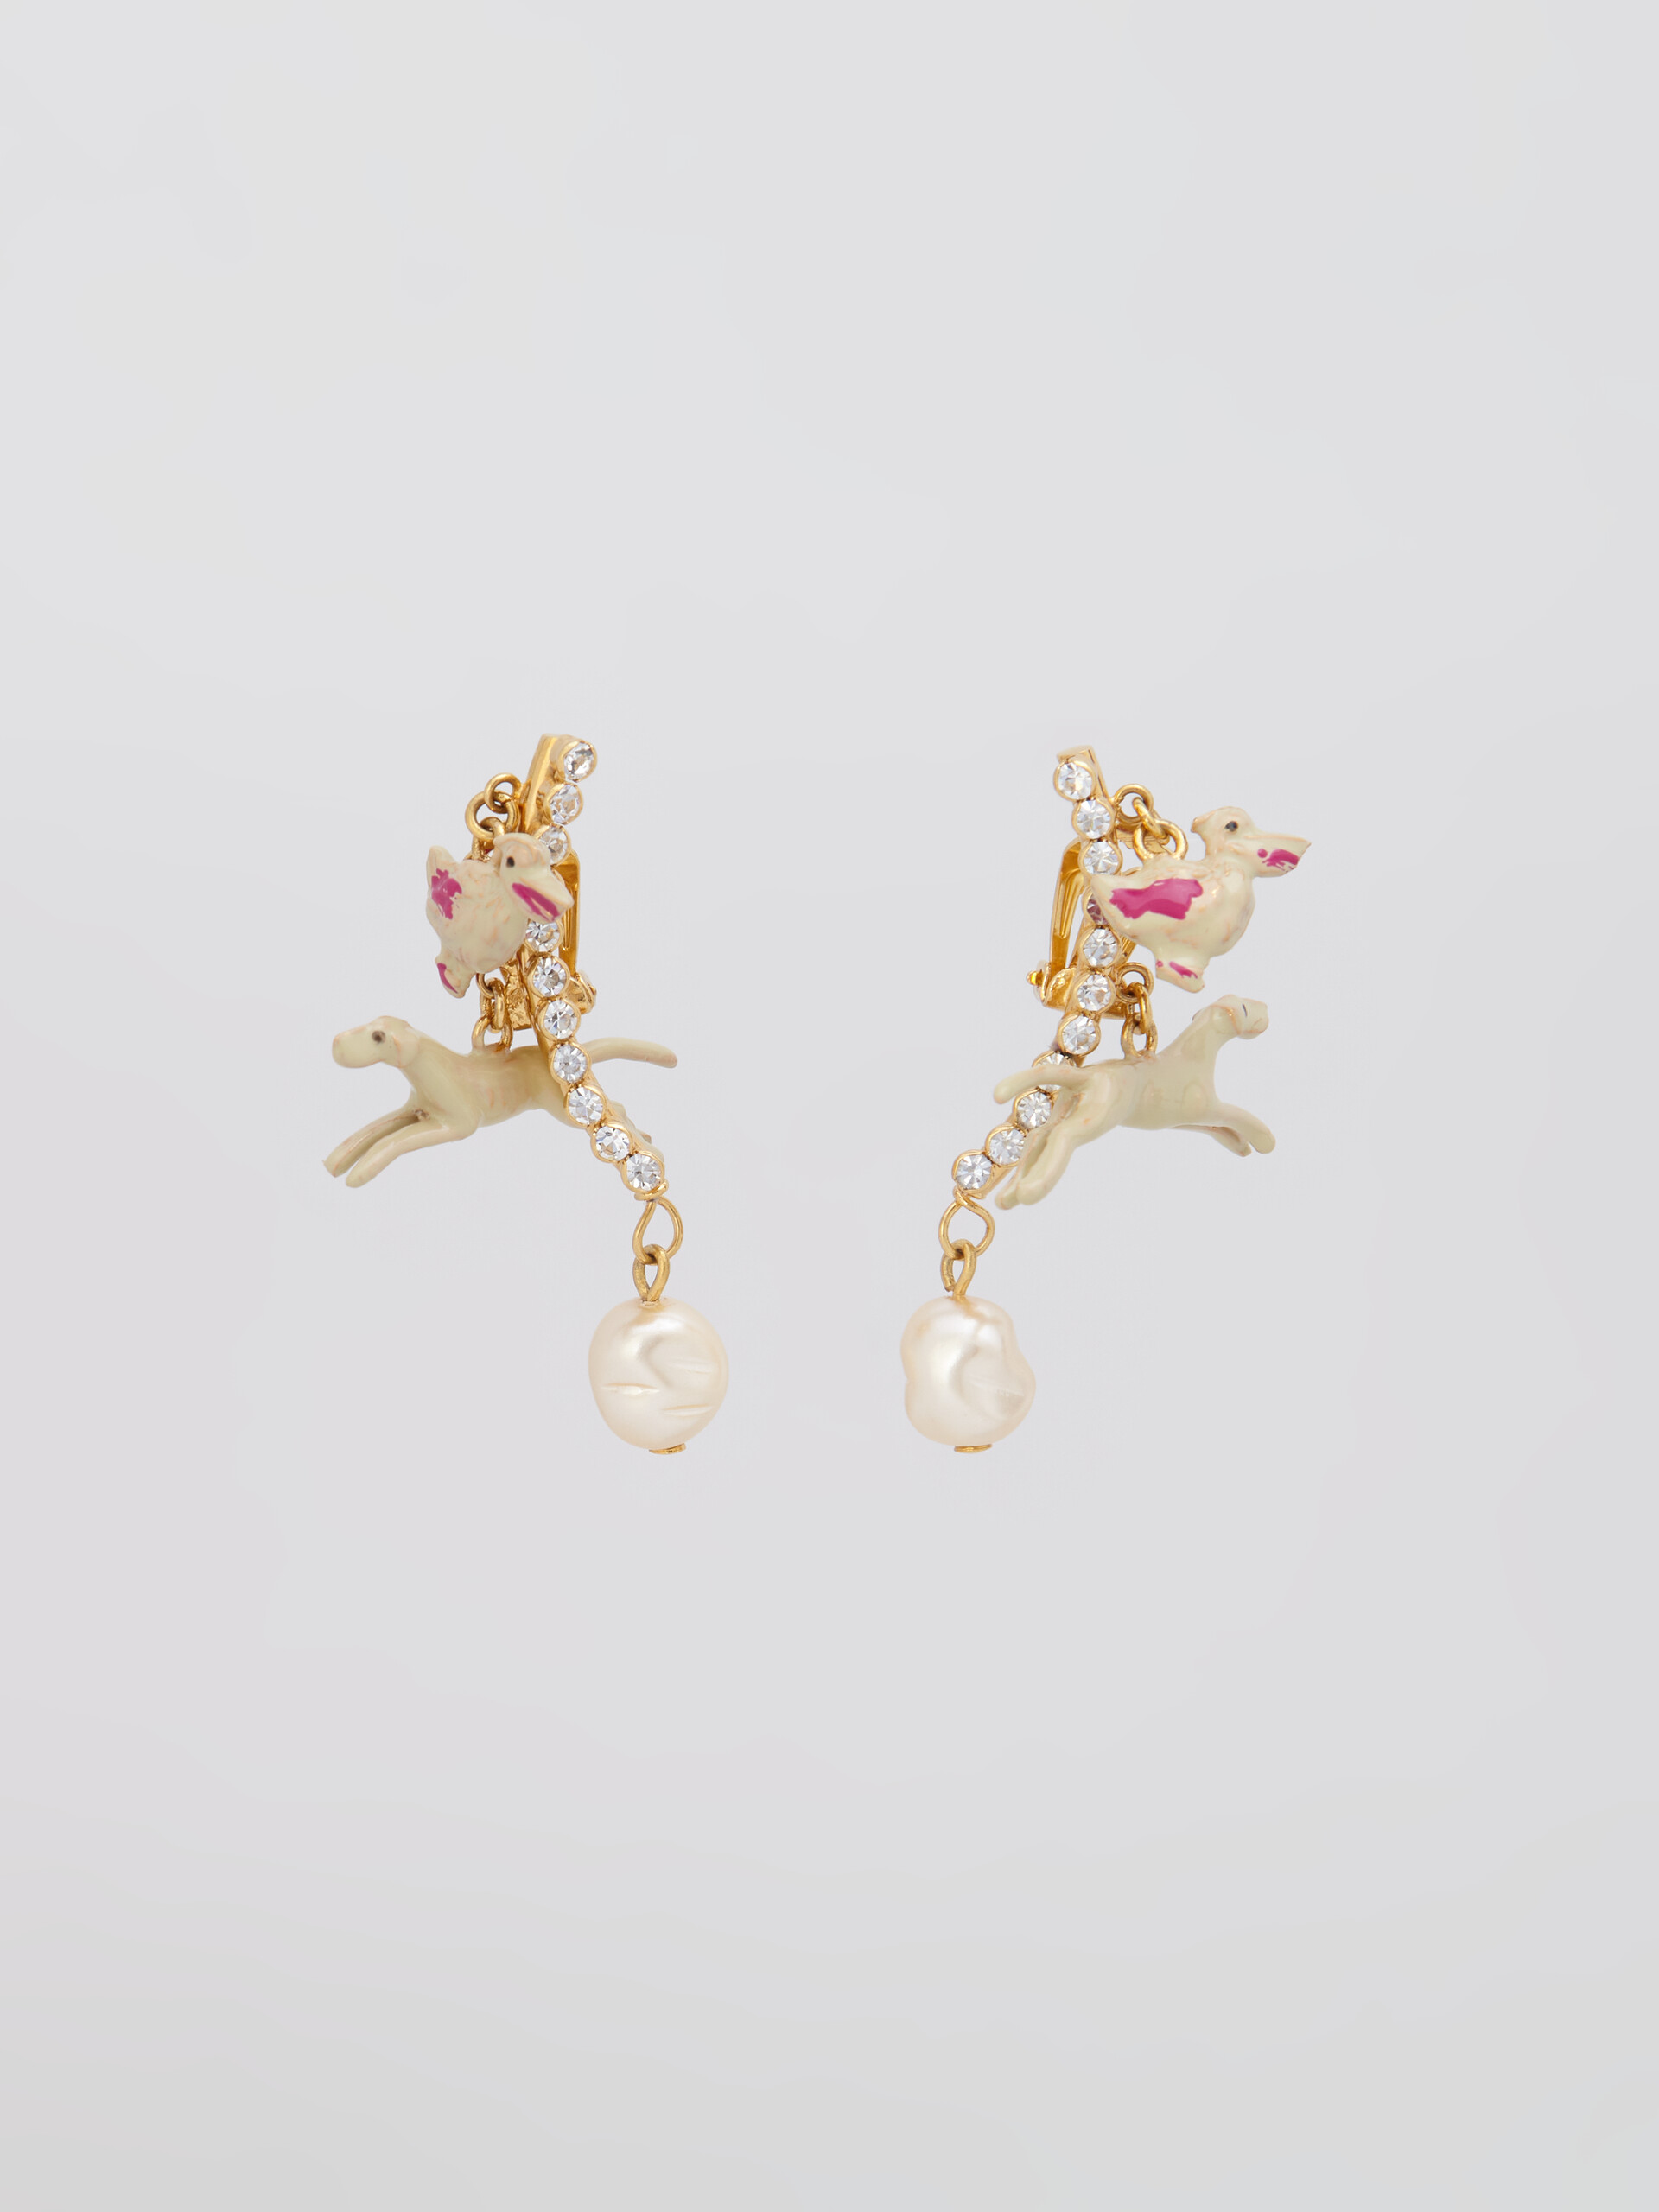 Brass FOUND TREASURES greyhound earrings - Earrings - Image 1